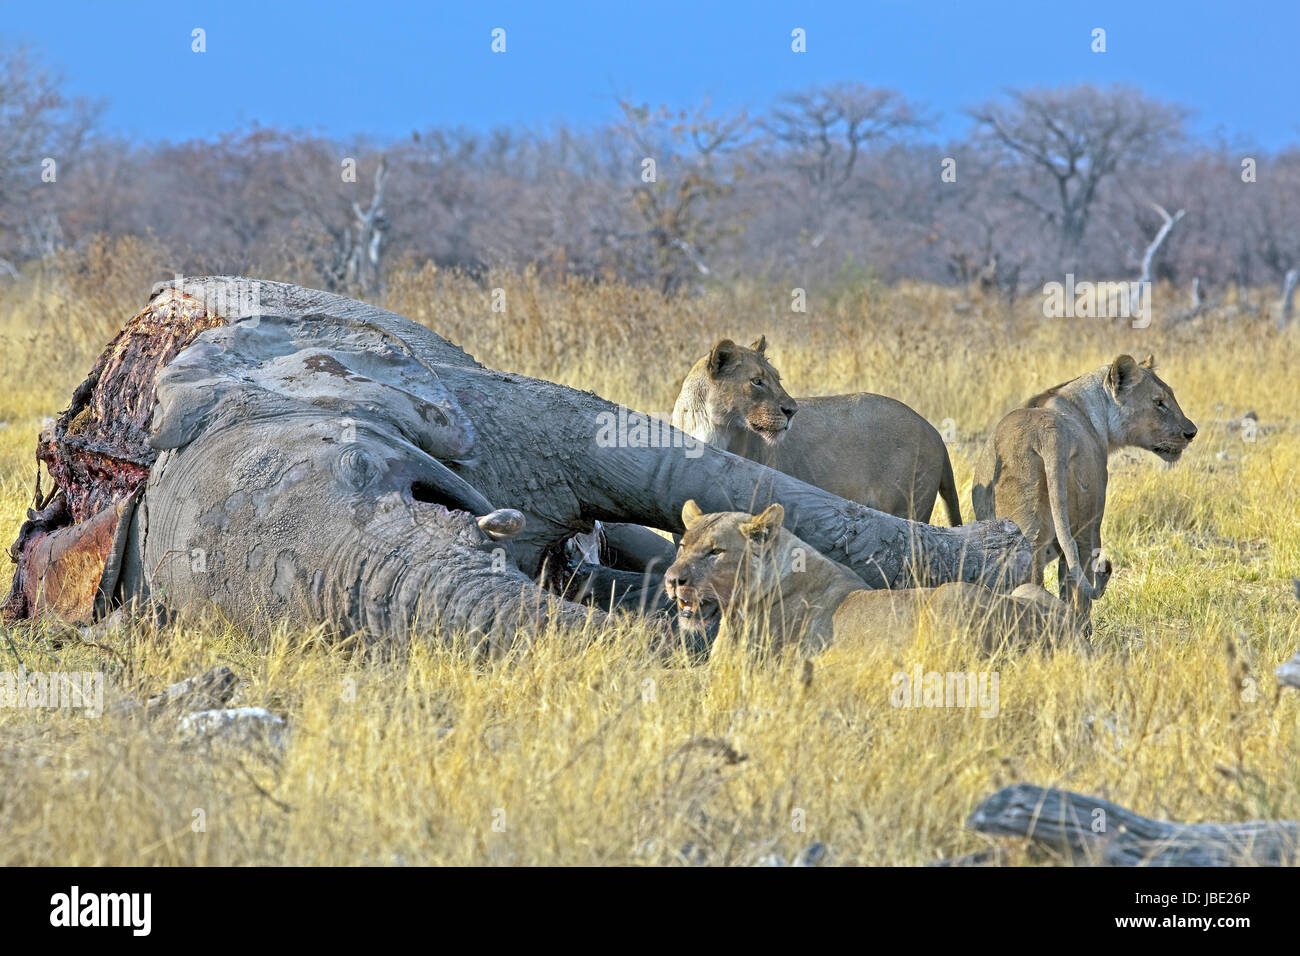 SŸdliches Afrika, Afrika, Afrika-SŸdwest, Namibie, Etoscha National Park, Lšwen, Panthera leo, weiblich, bewachen Beute, Elefanten-Kadaver Banque D'Images